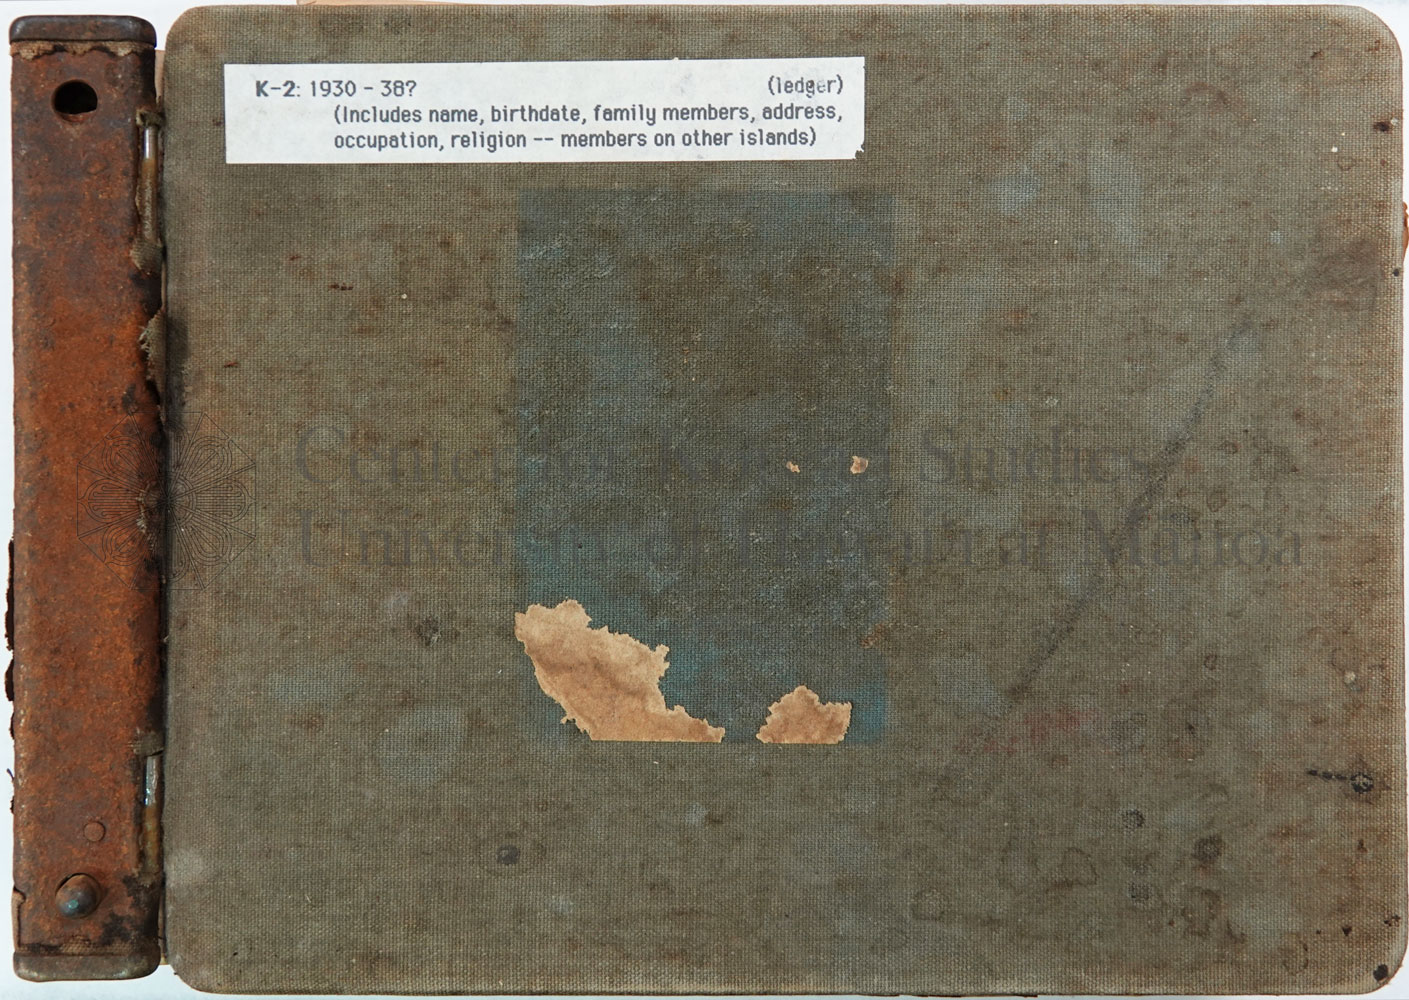 Membership Information File (Cover), 1930-38?
